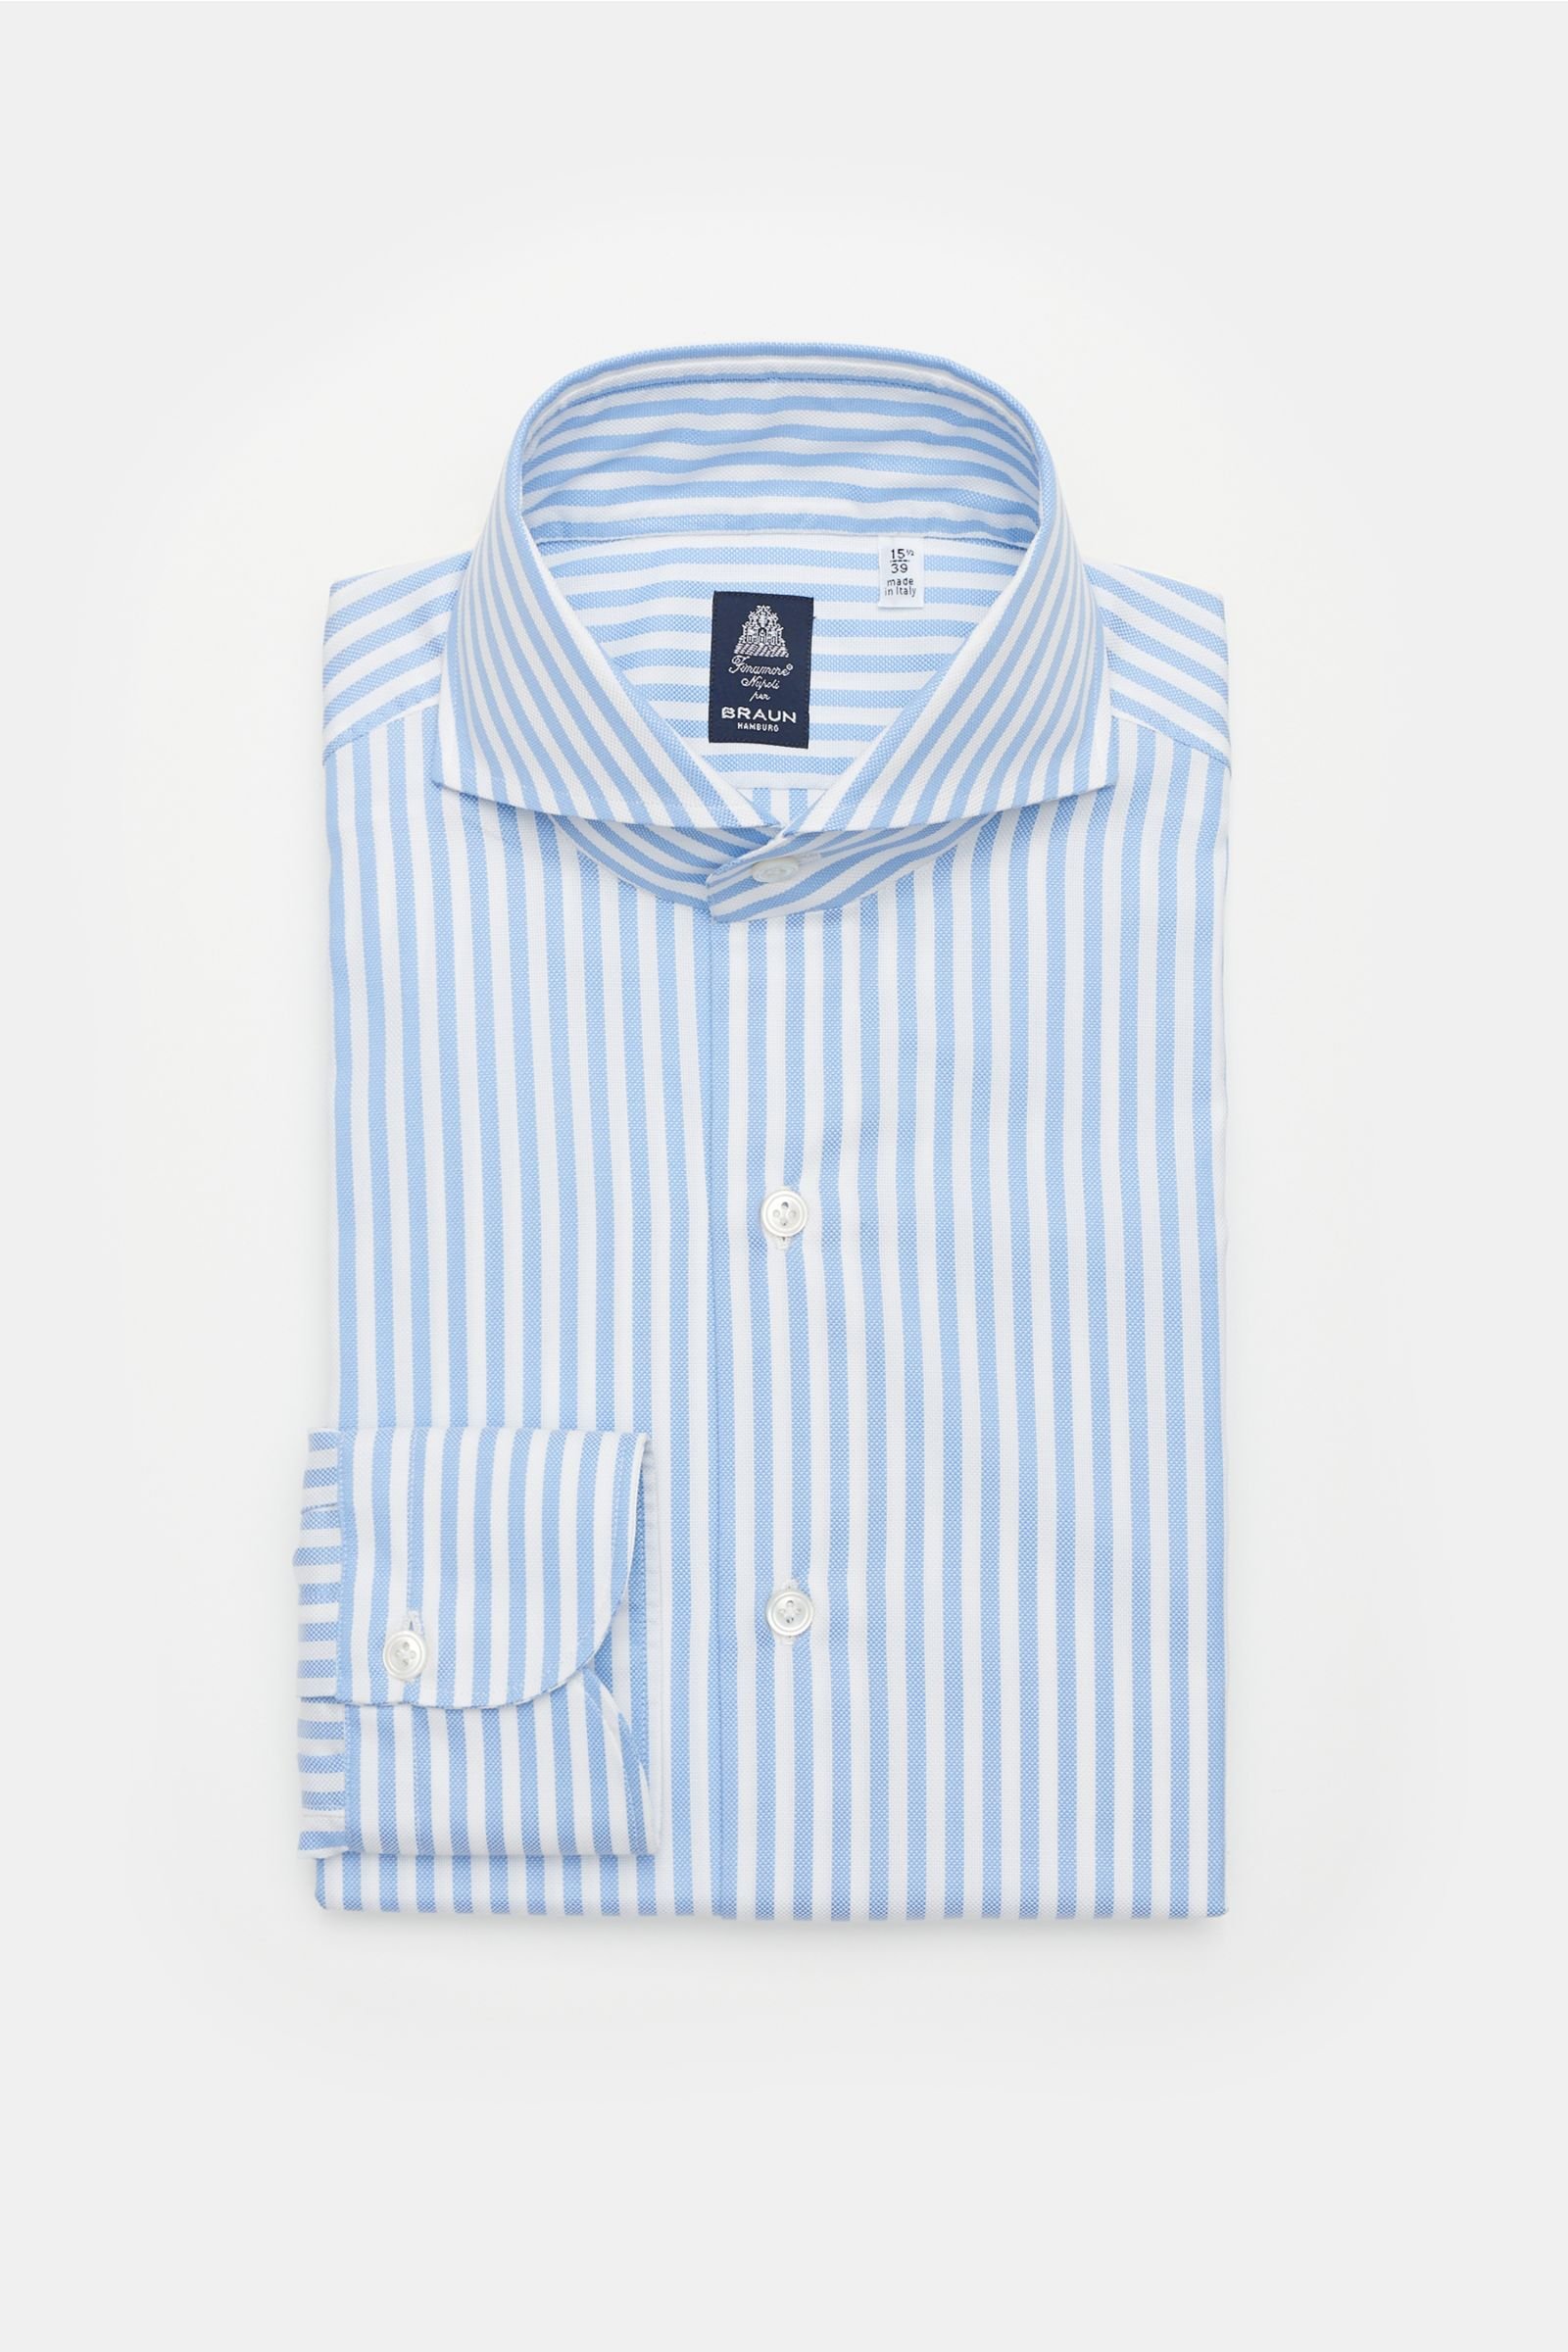 Business shirt 'Sergio Napoli' shark collar light blue/white striped